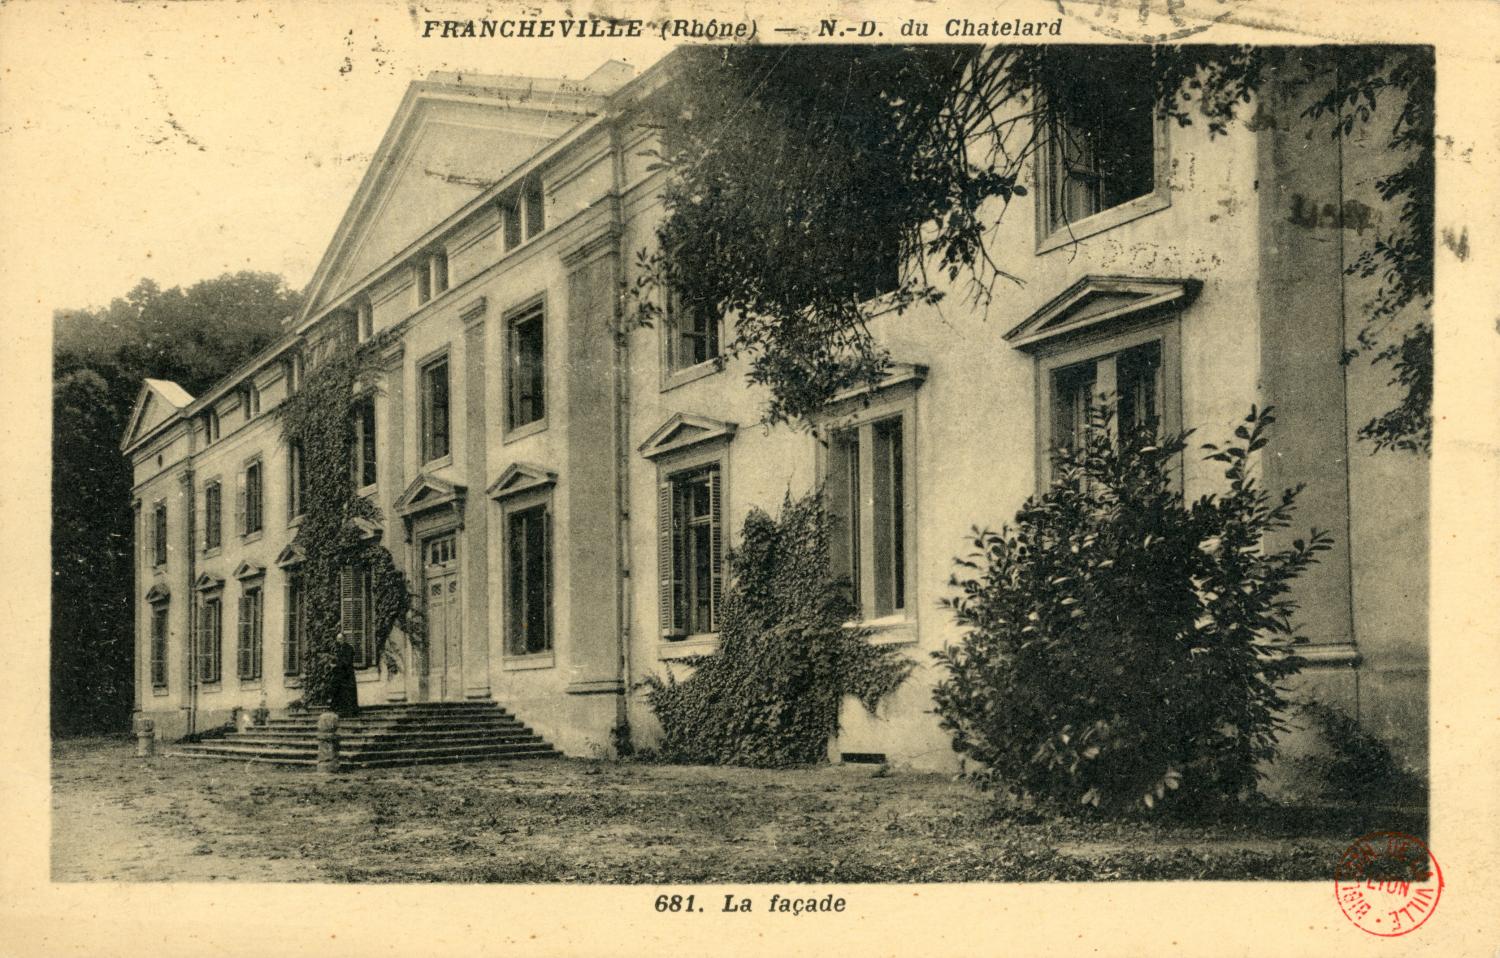 Francheville (Rhône). - N.-D. du Chatelard. - La façade